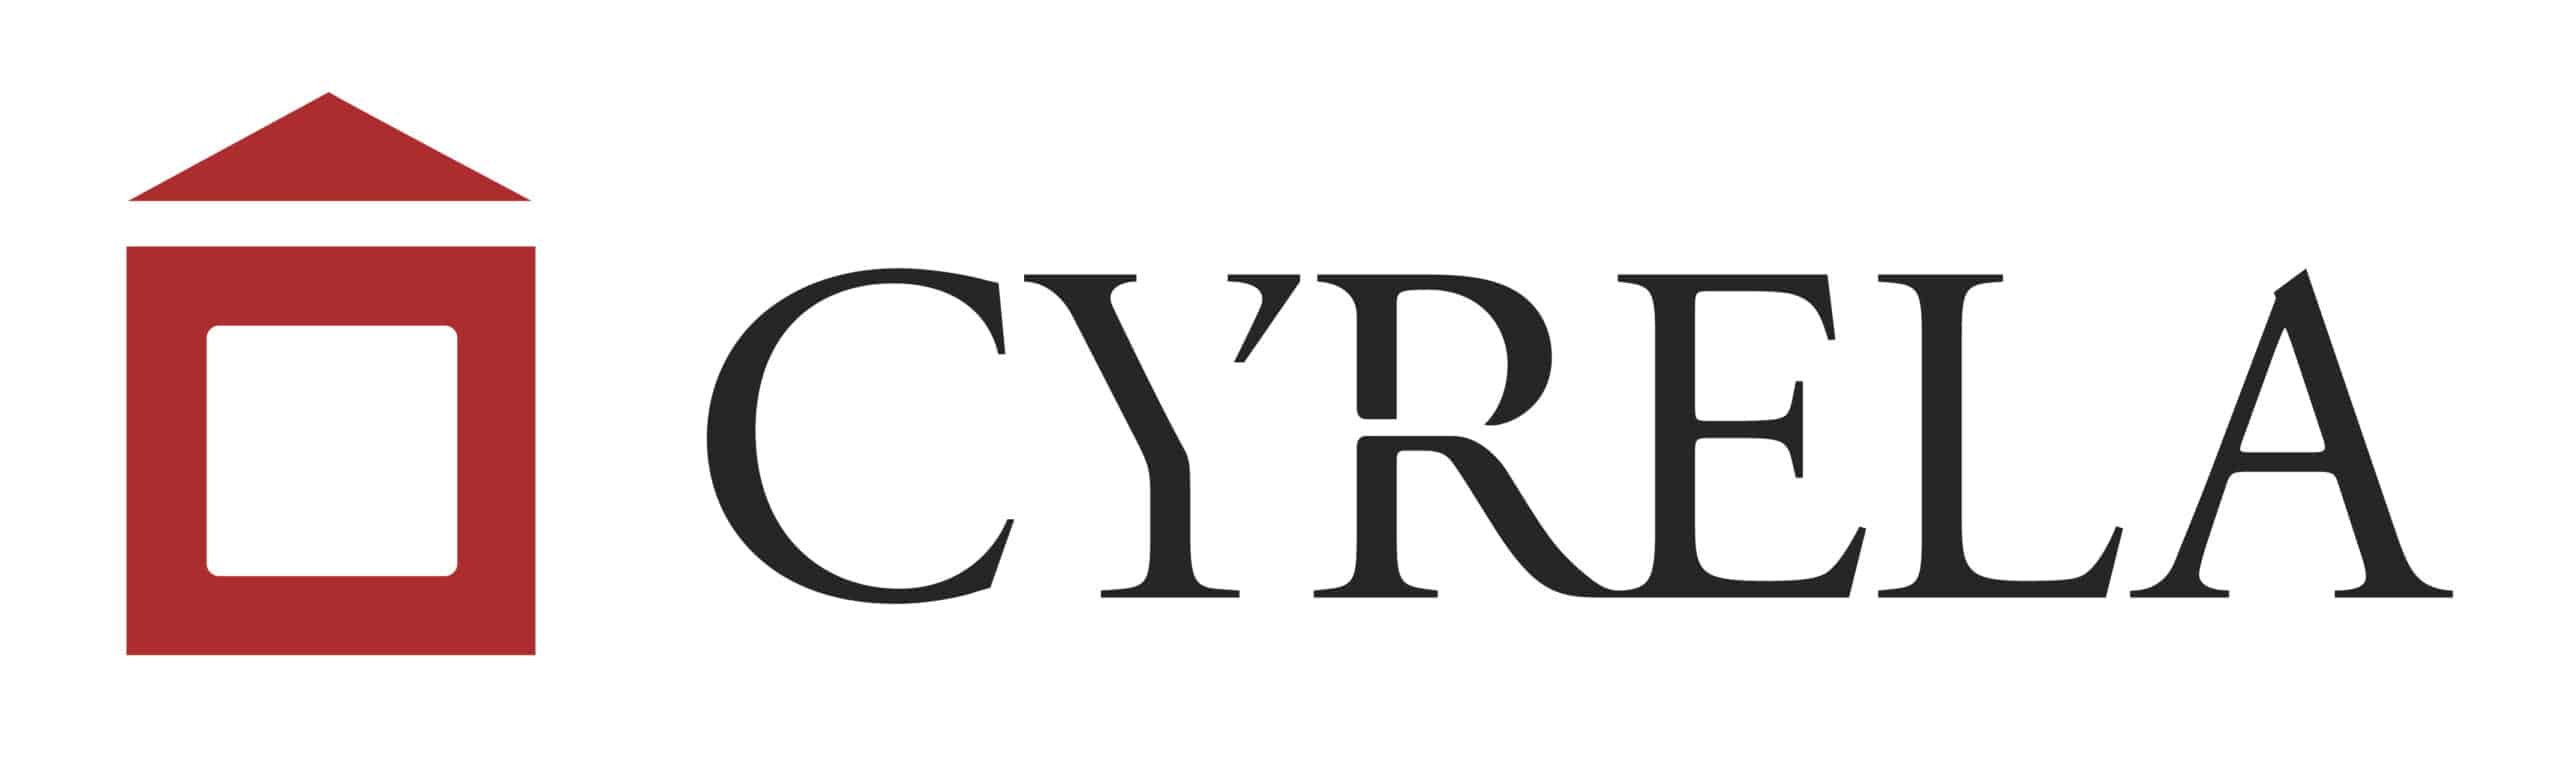 Cyrela Brazil Realty - CYRE3